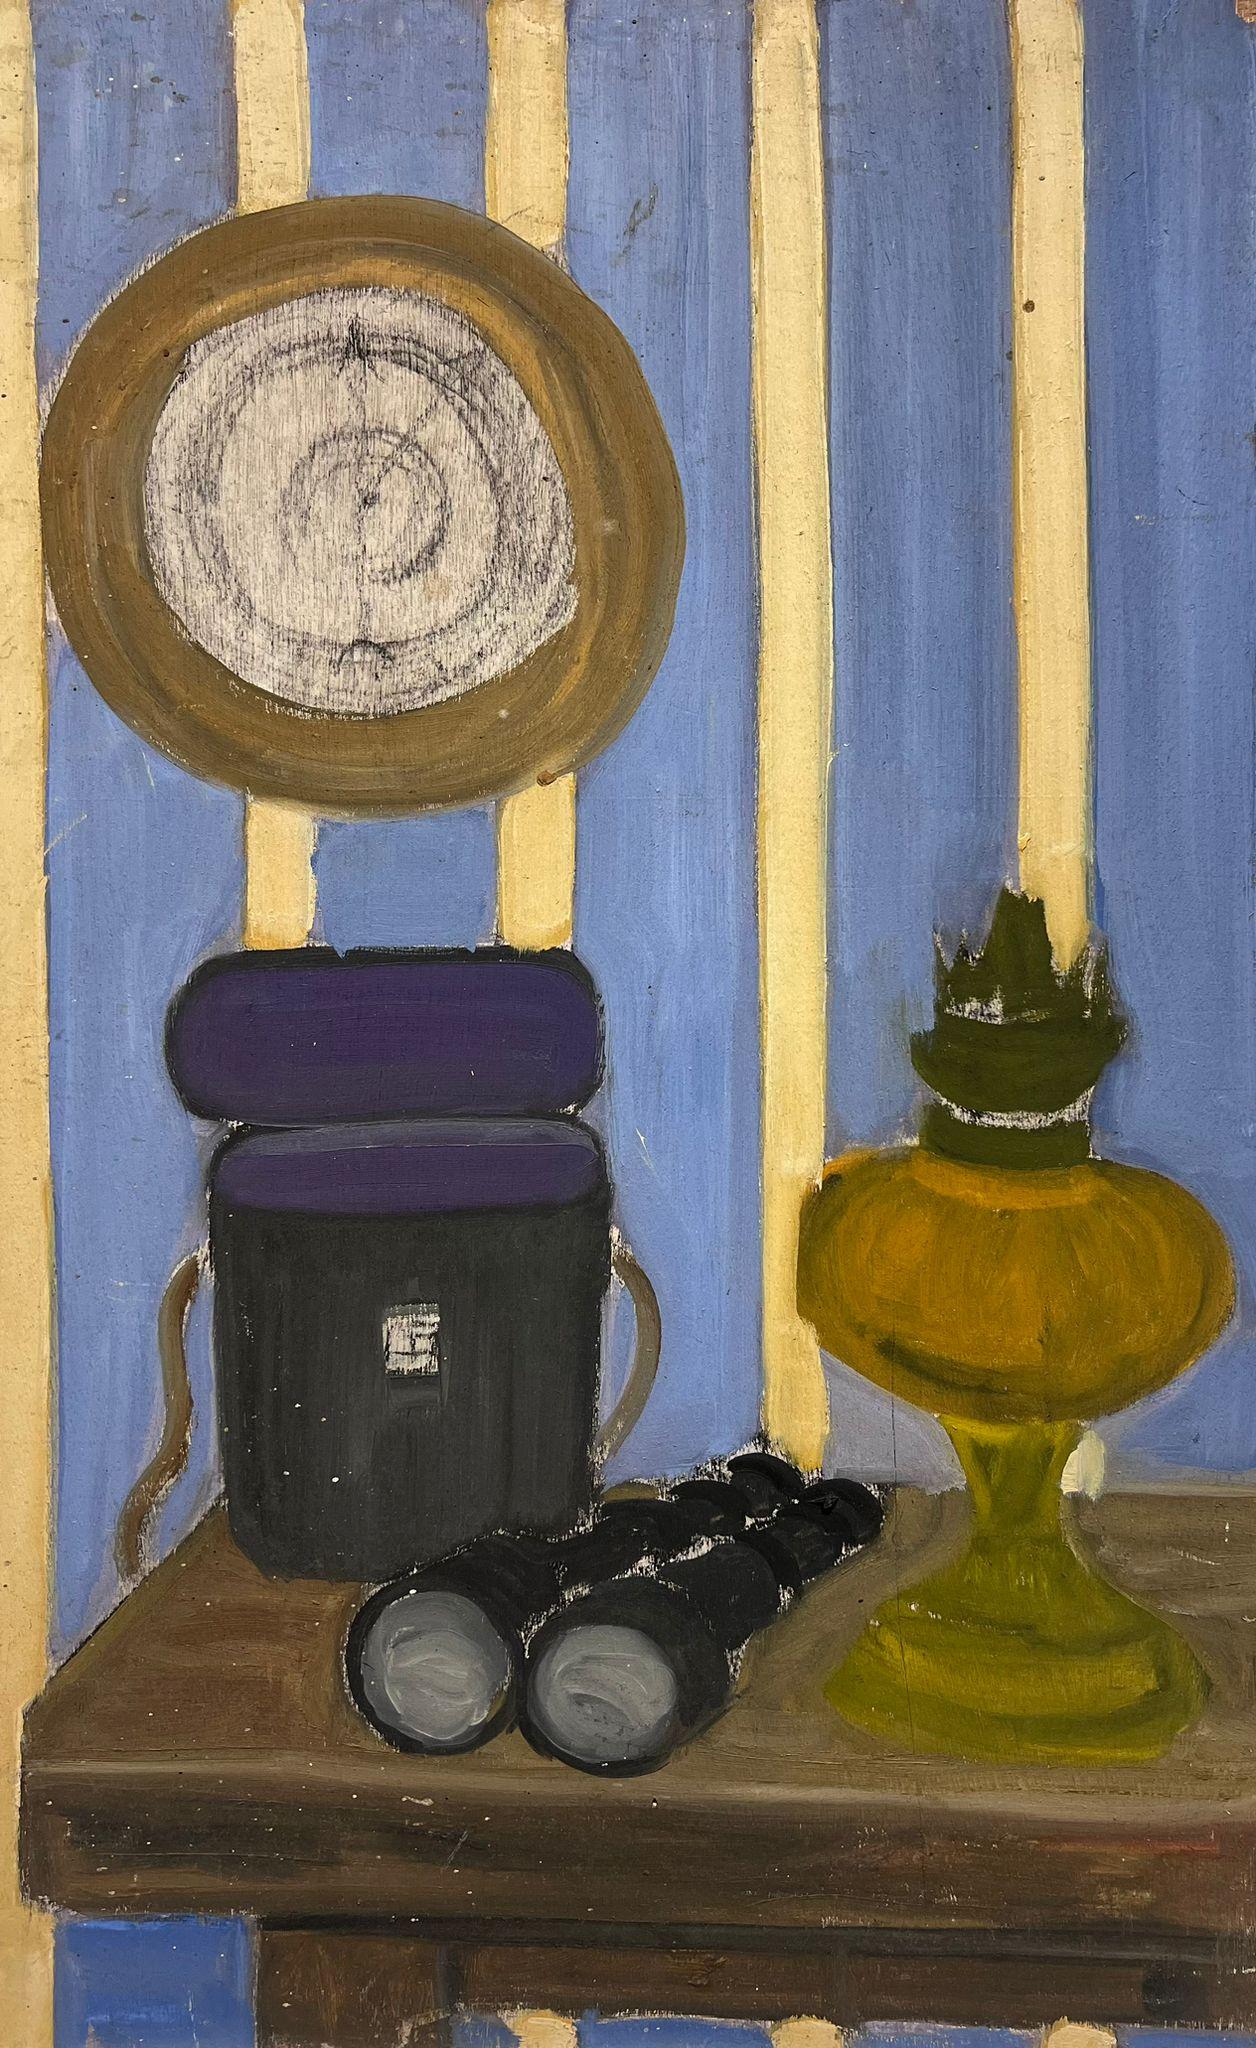 Peinture à l'huile du milieu du siècle The Painted Room Room Still Life with Binoculars